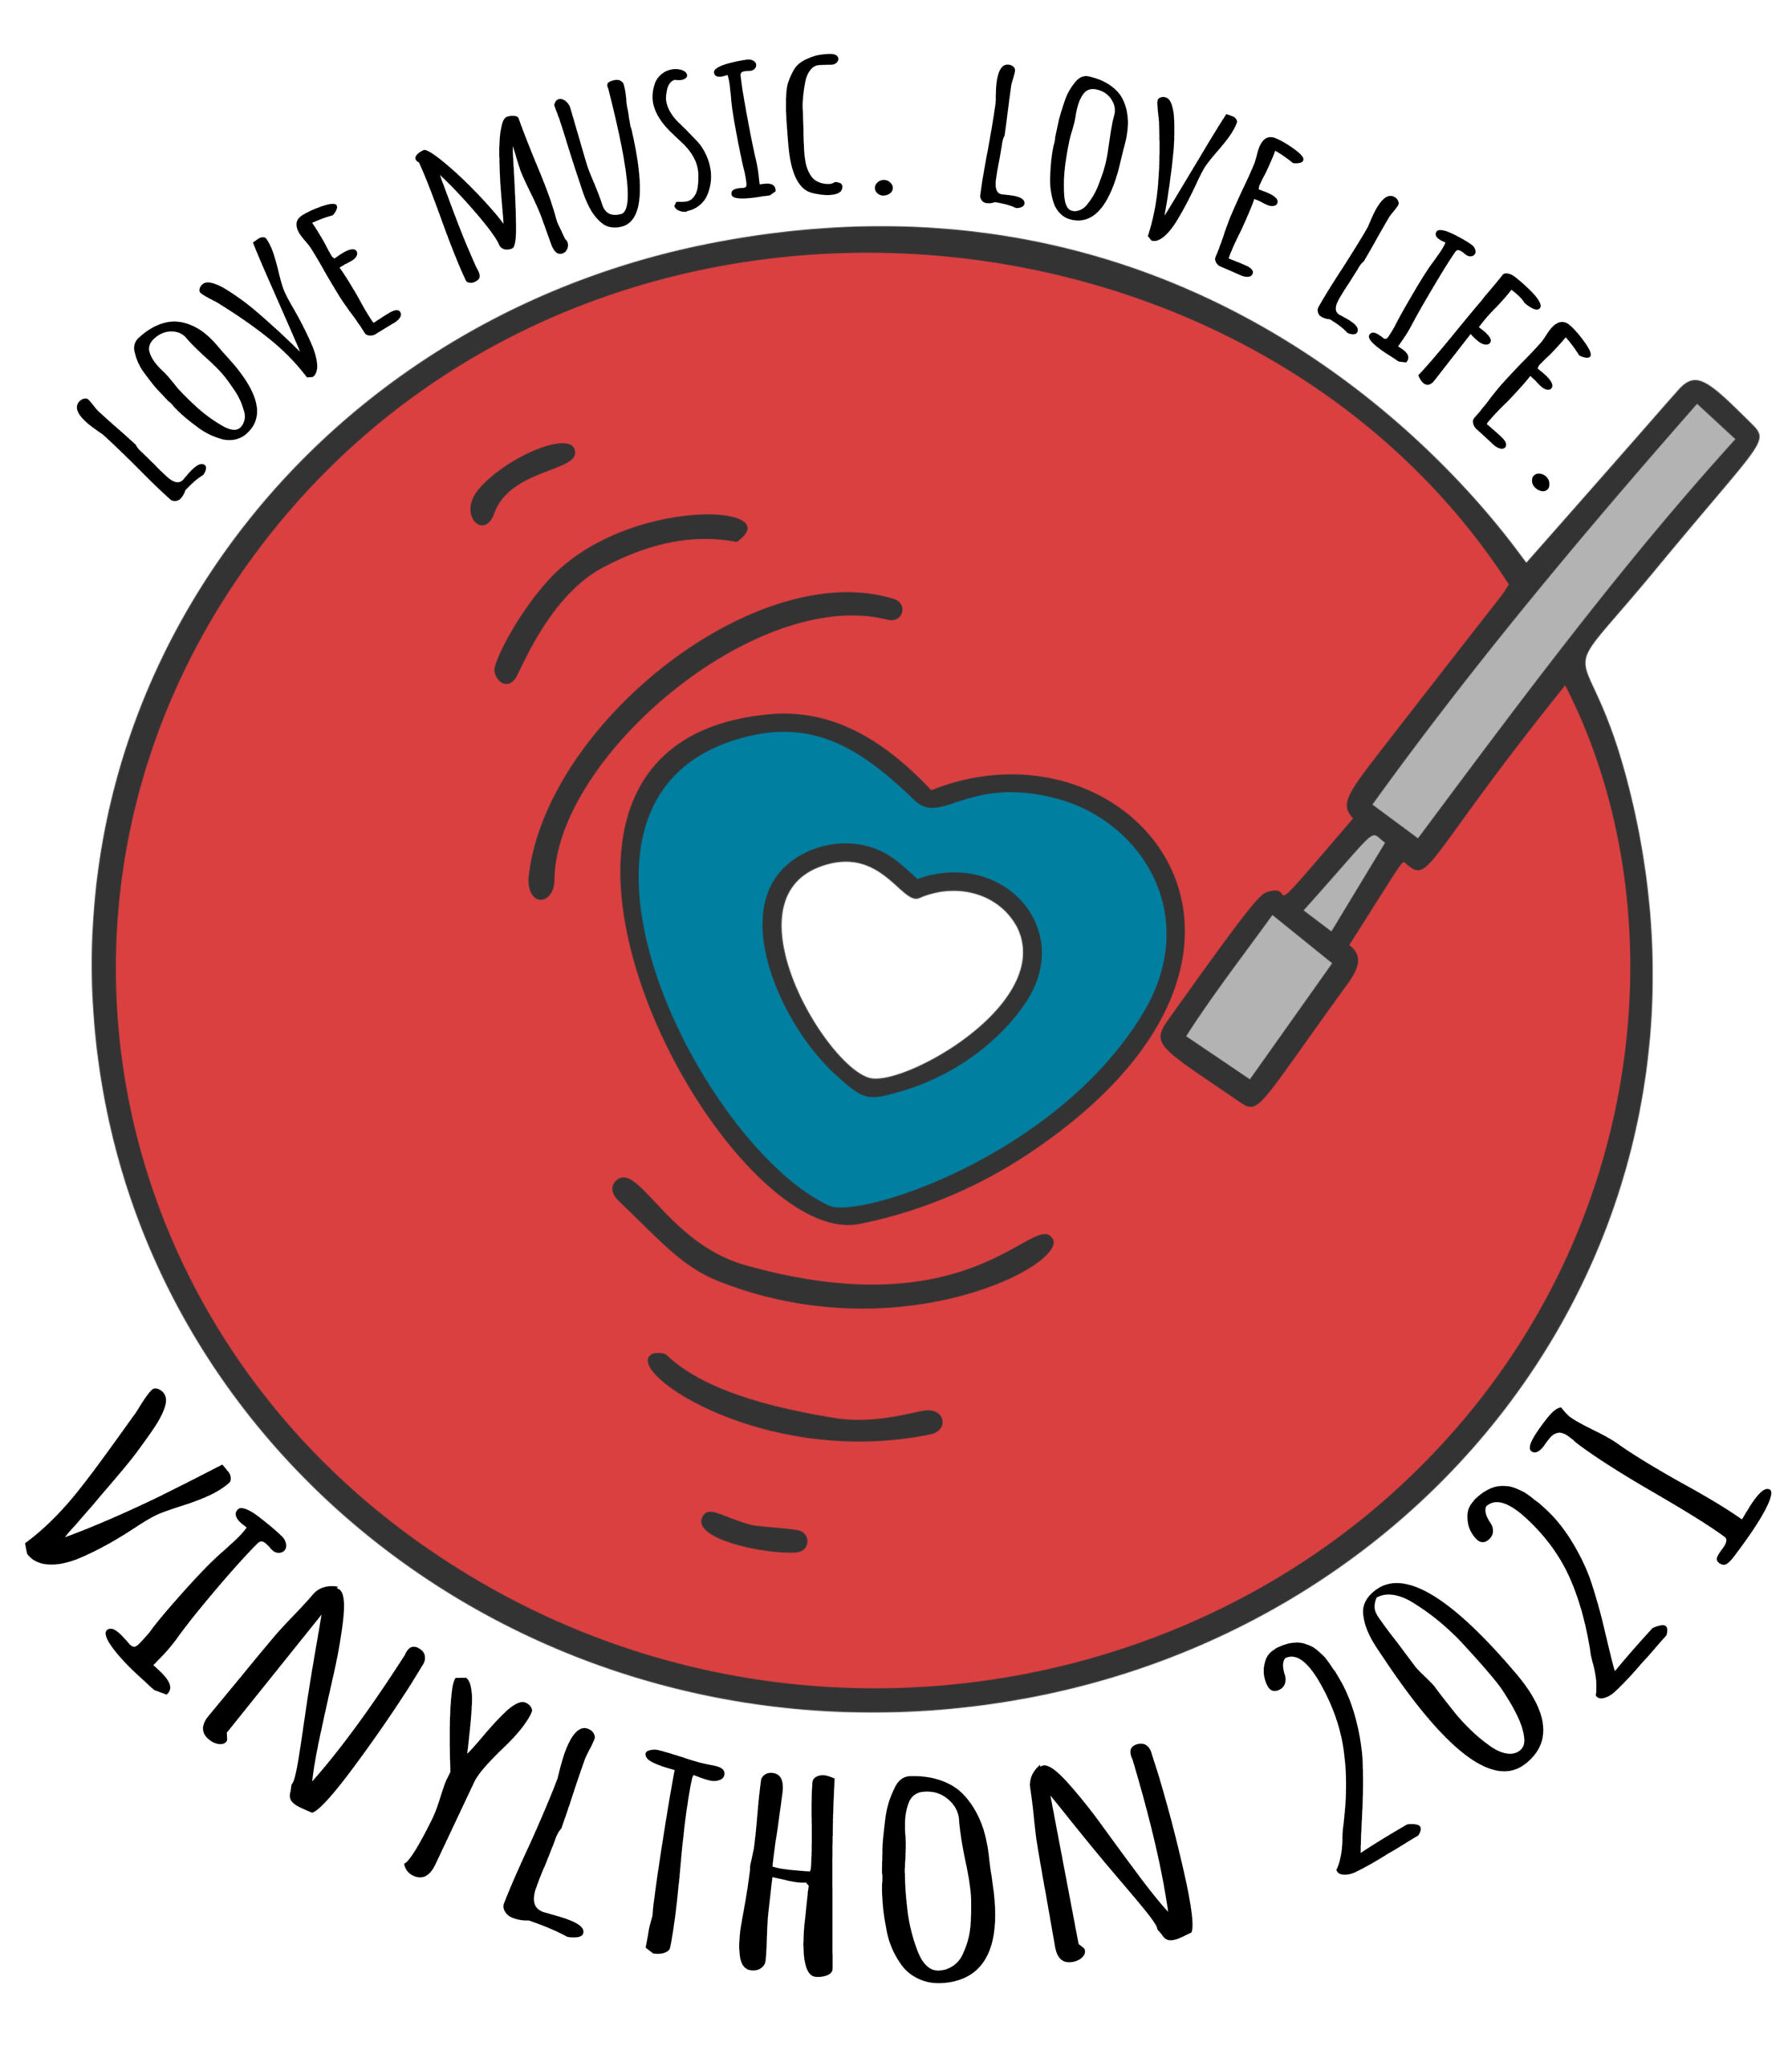 Vinylthon 2021 is coming!